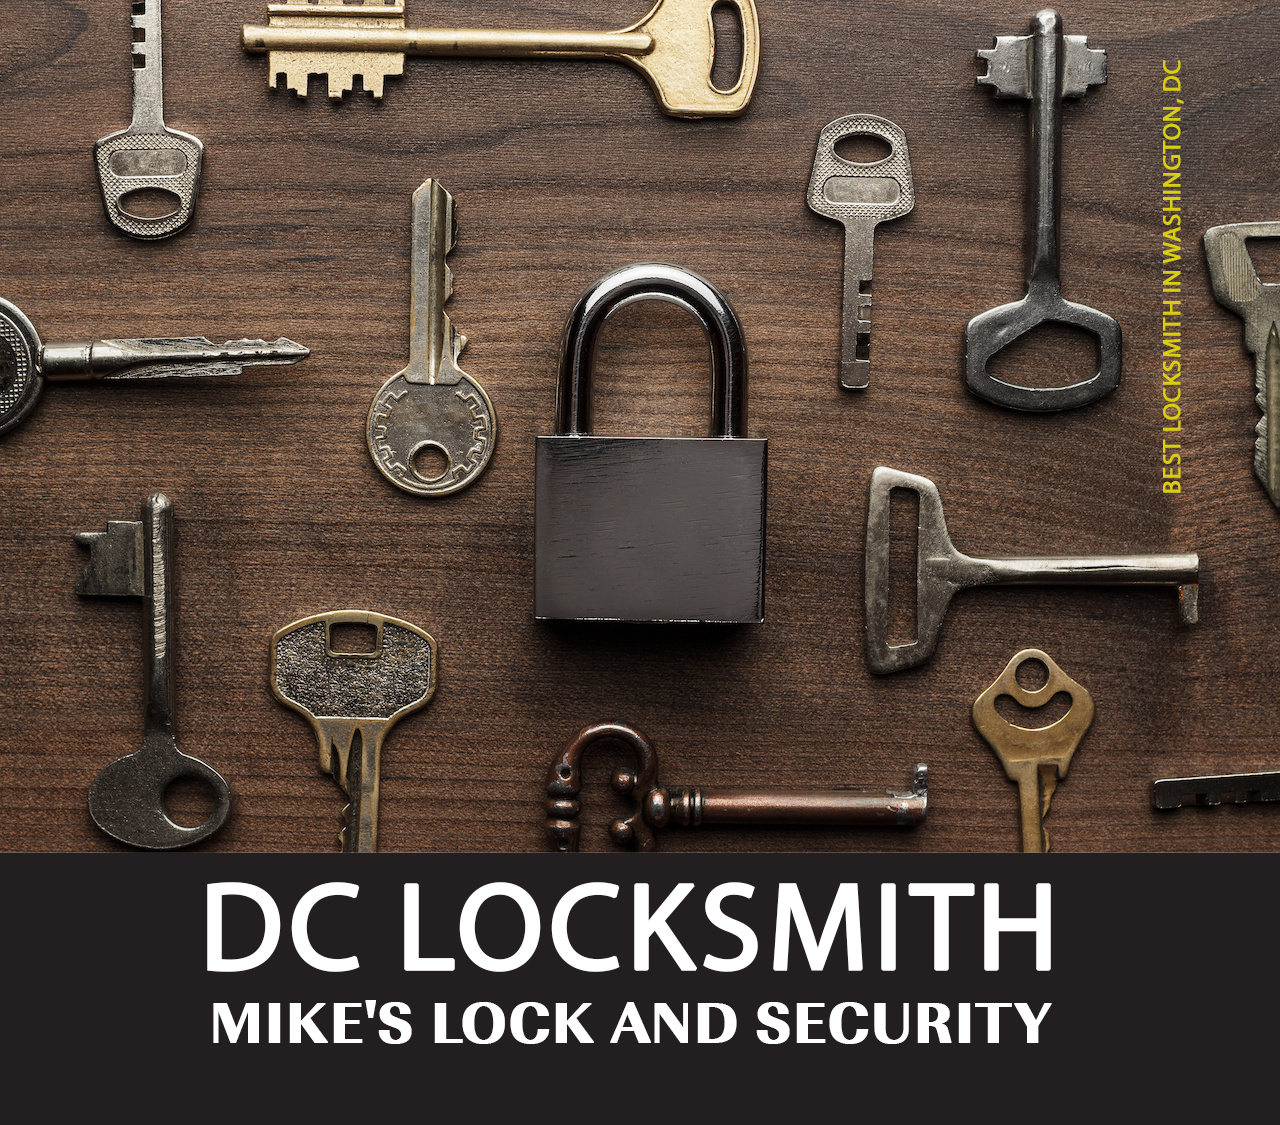 DC locksmith